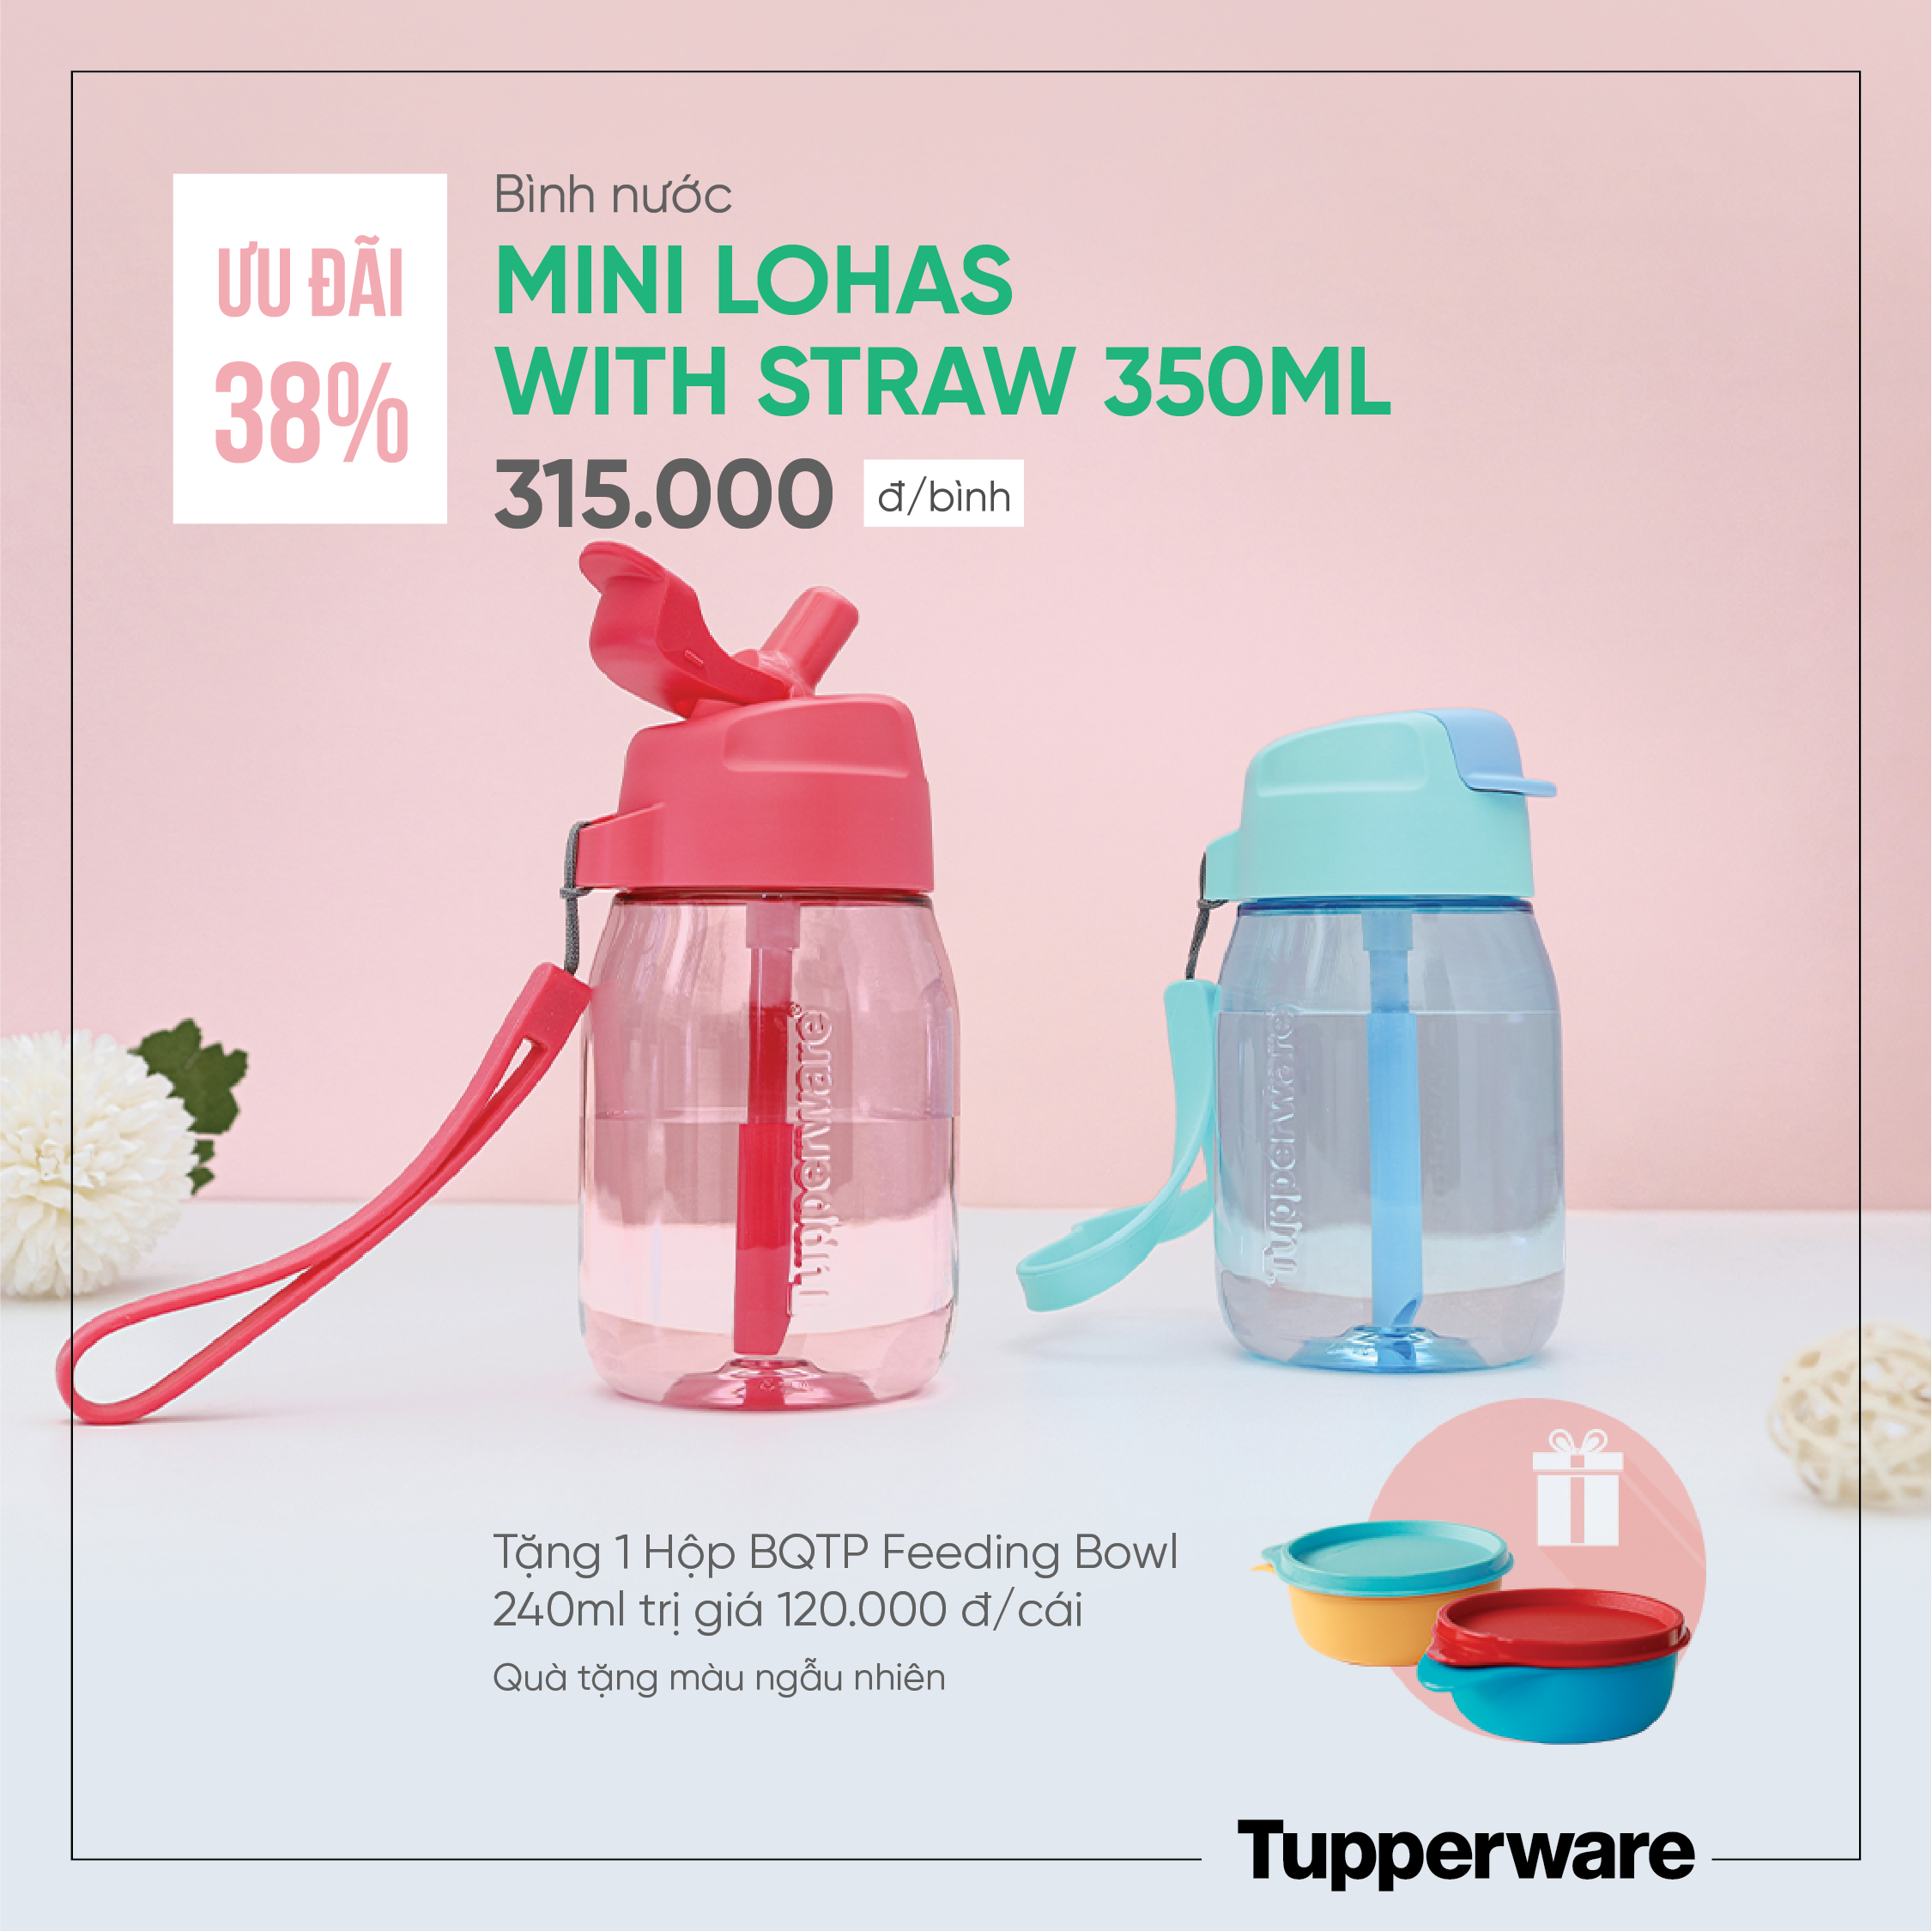 Bình Nước Tupperware Mini Lohas with Straw